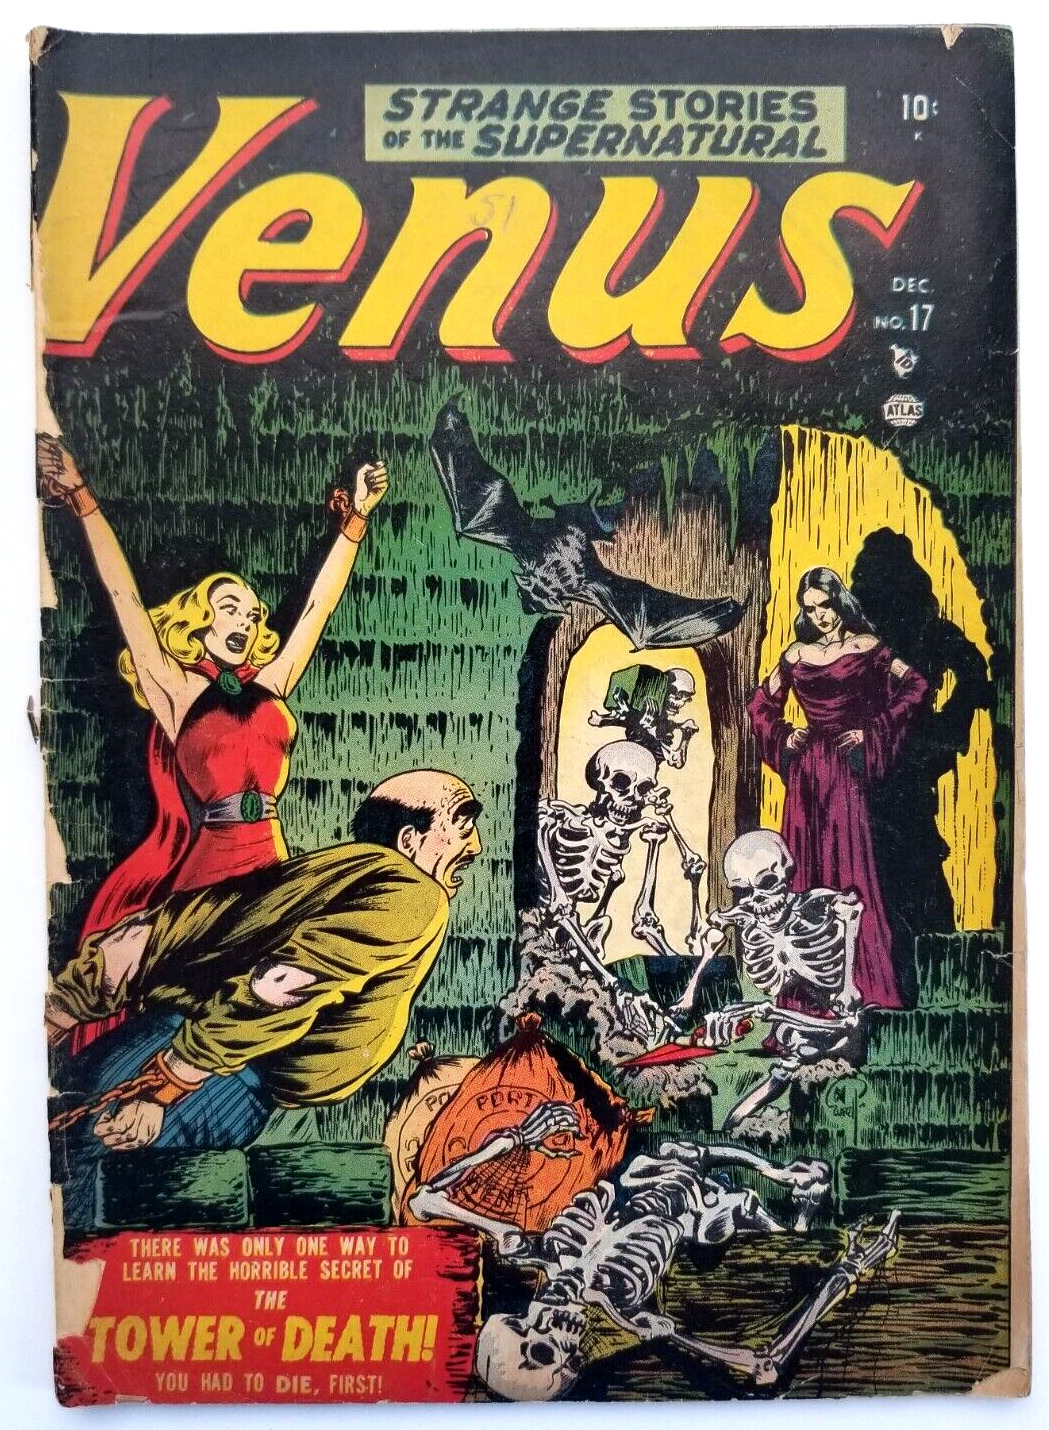 VENUS #17 FAIR 1.0 (ATLAS 1951) BONDAGE, SKELETON COVER. PRECODE HORROR